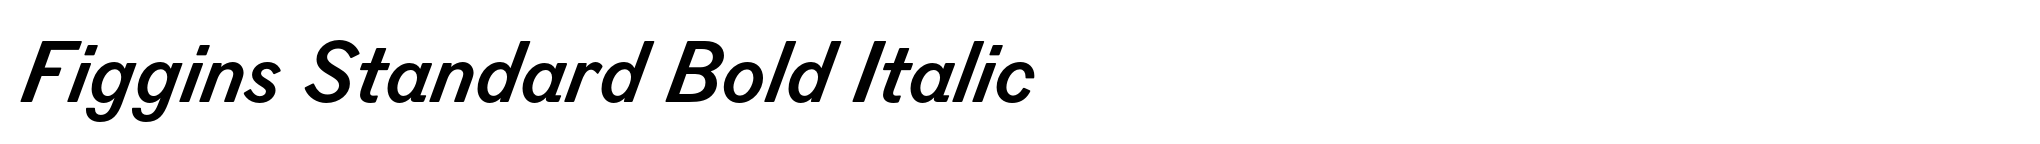 Figgins Standard Bold Italic image